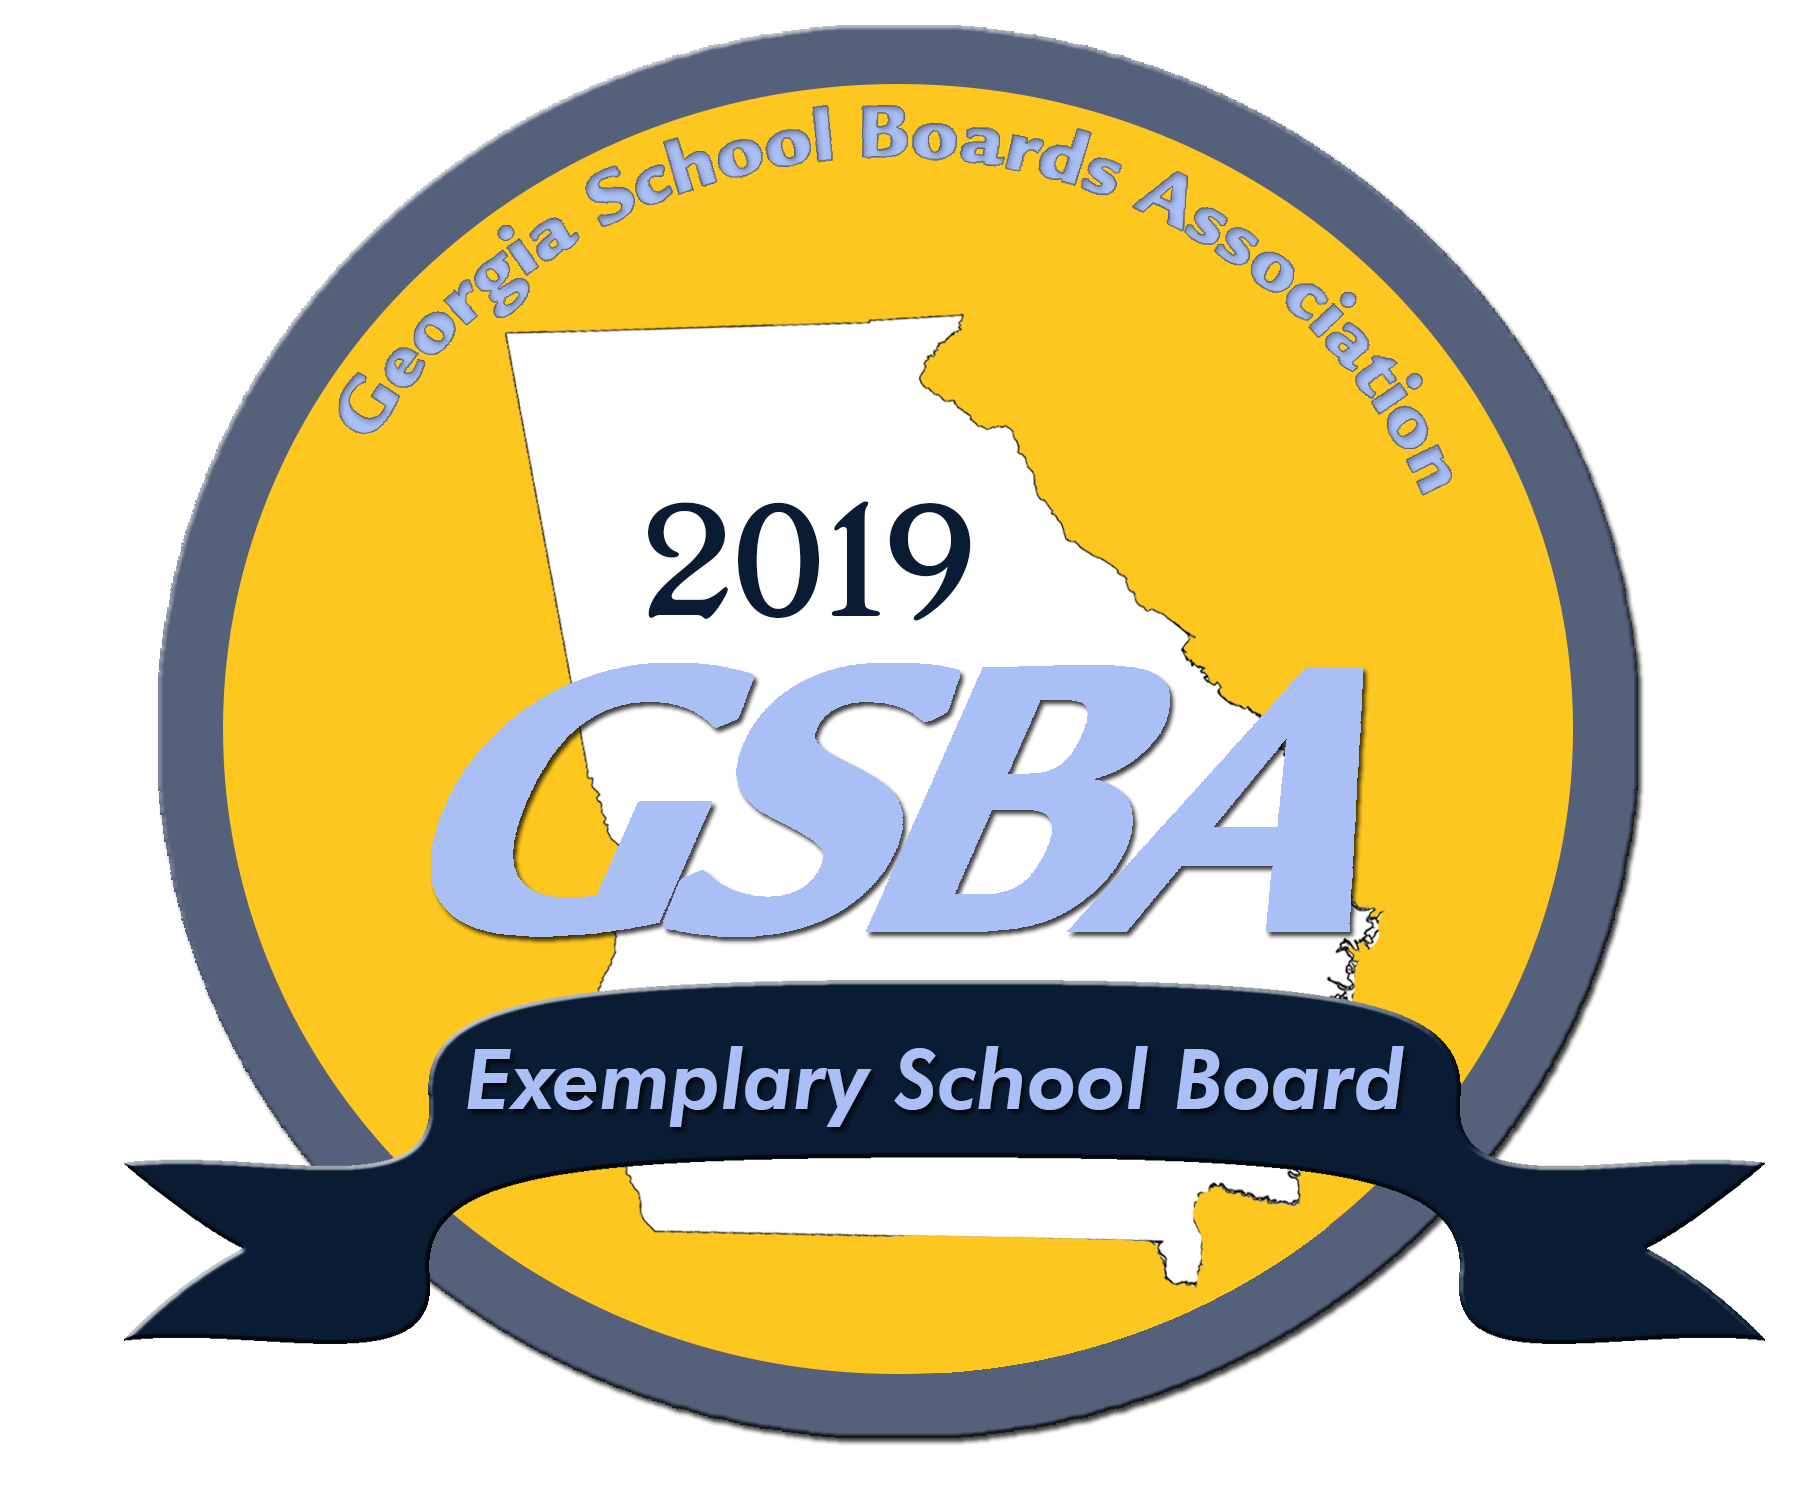 GSBA Exemplary School Board 2019